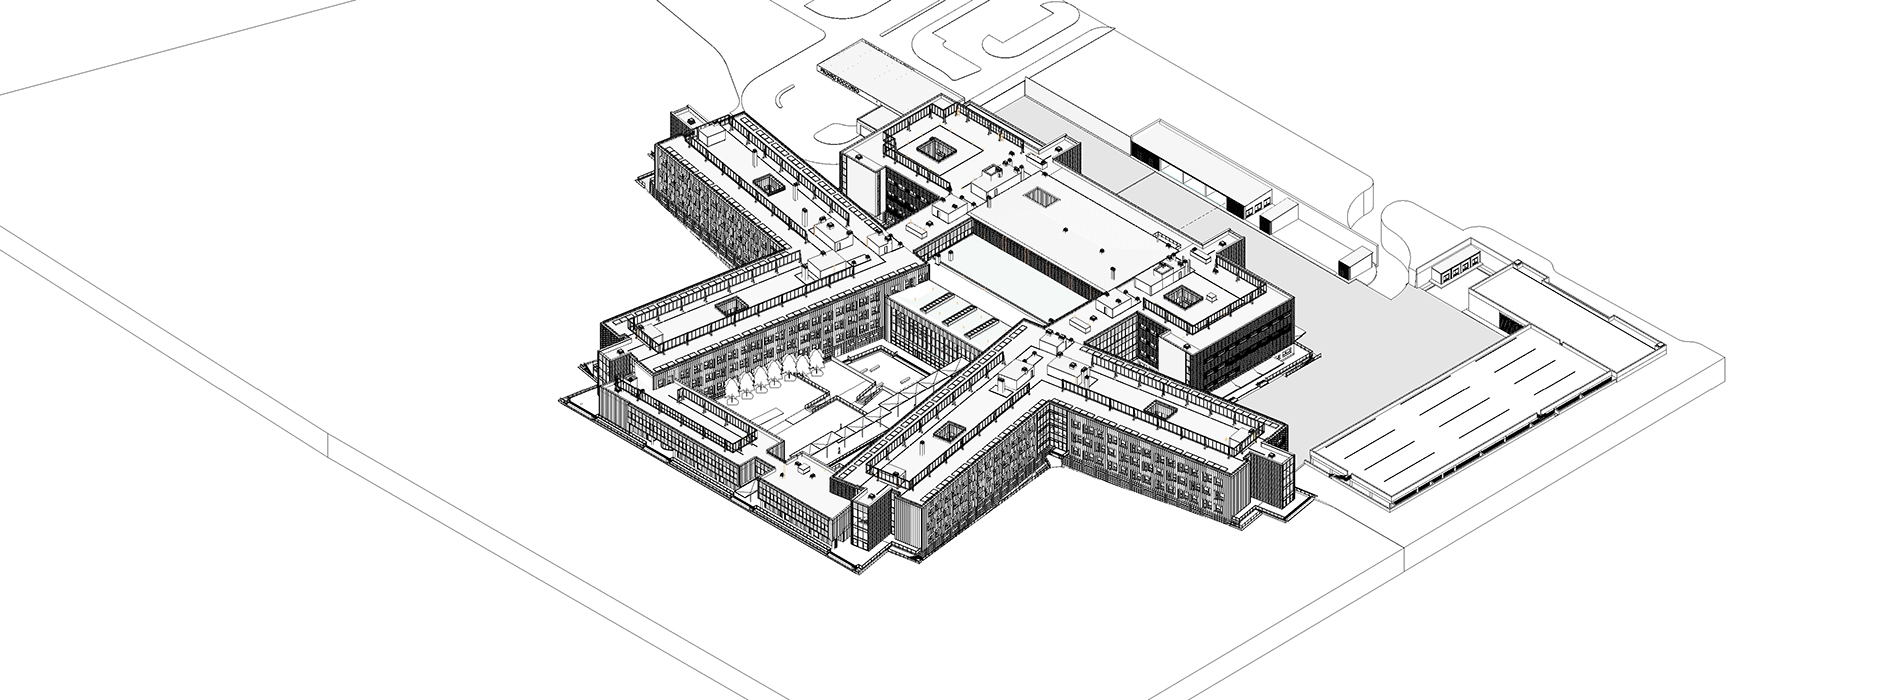 New Sibaritide Hospital